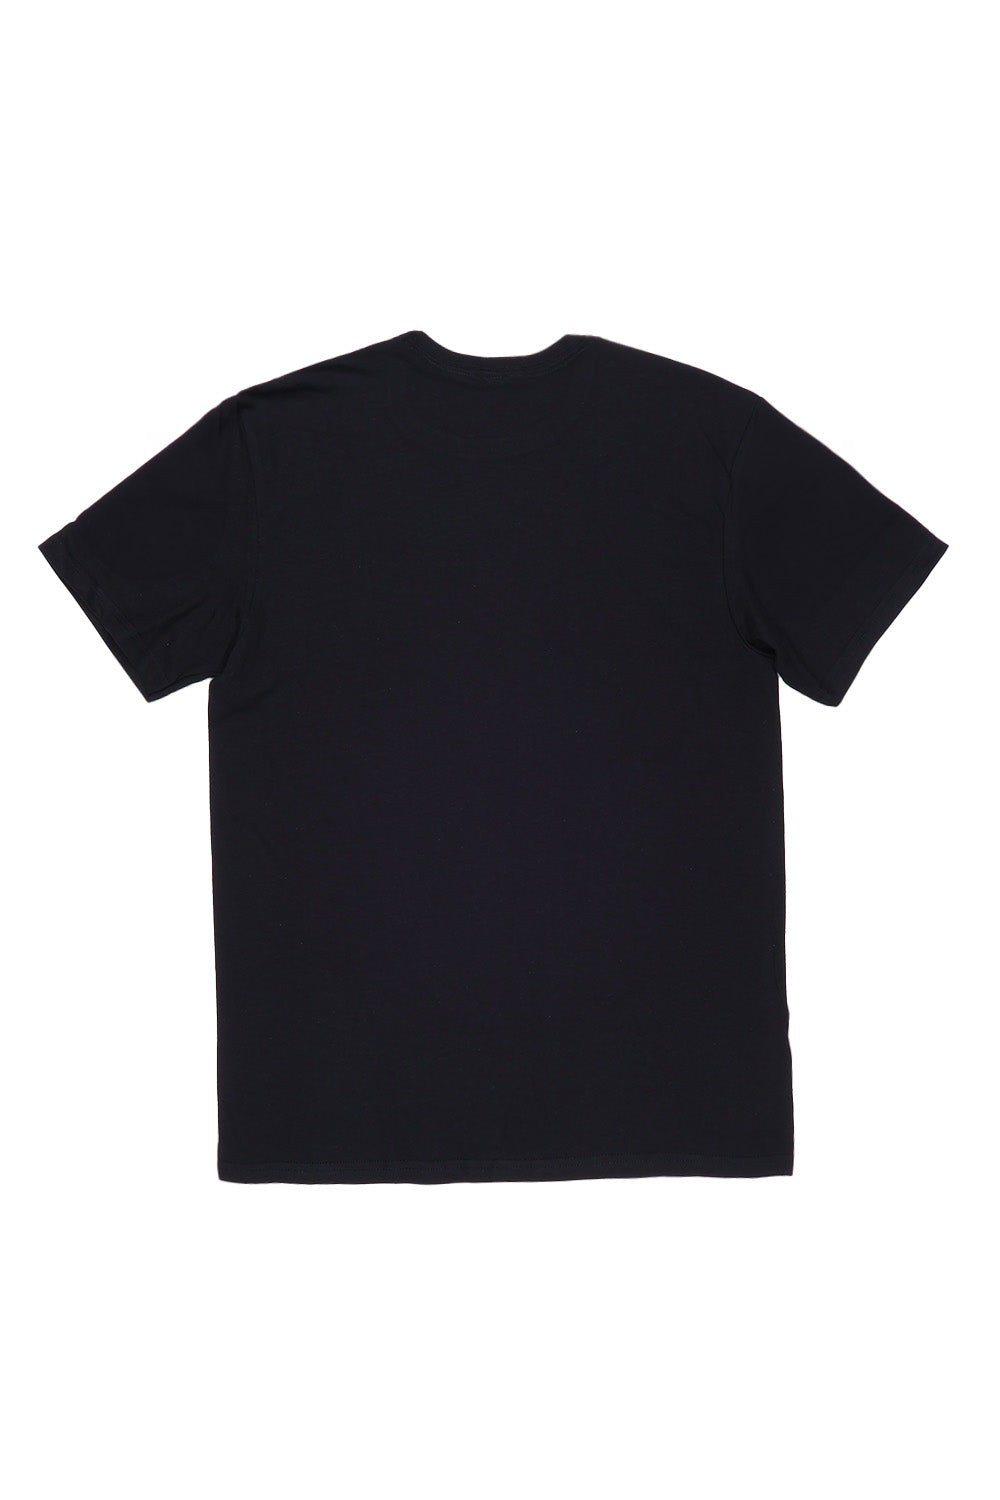 San Diego T-Shirt in Black (Custom Packs)